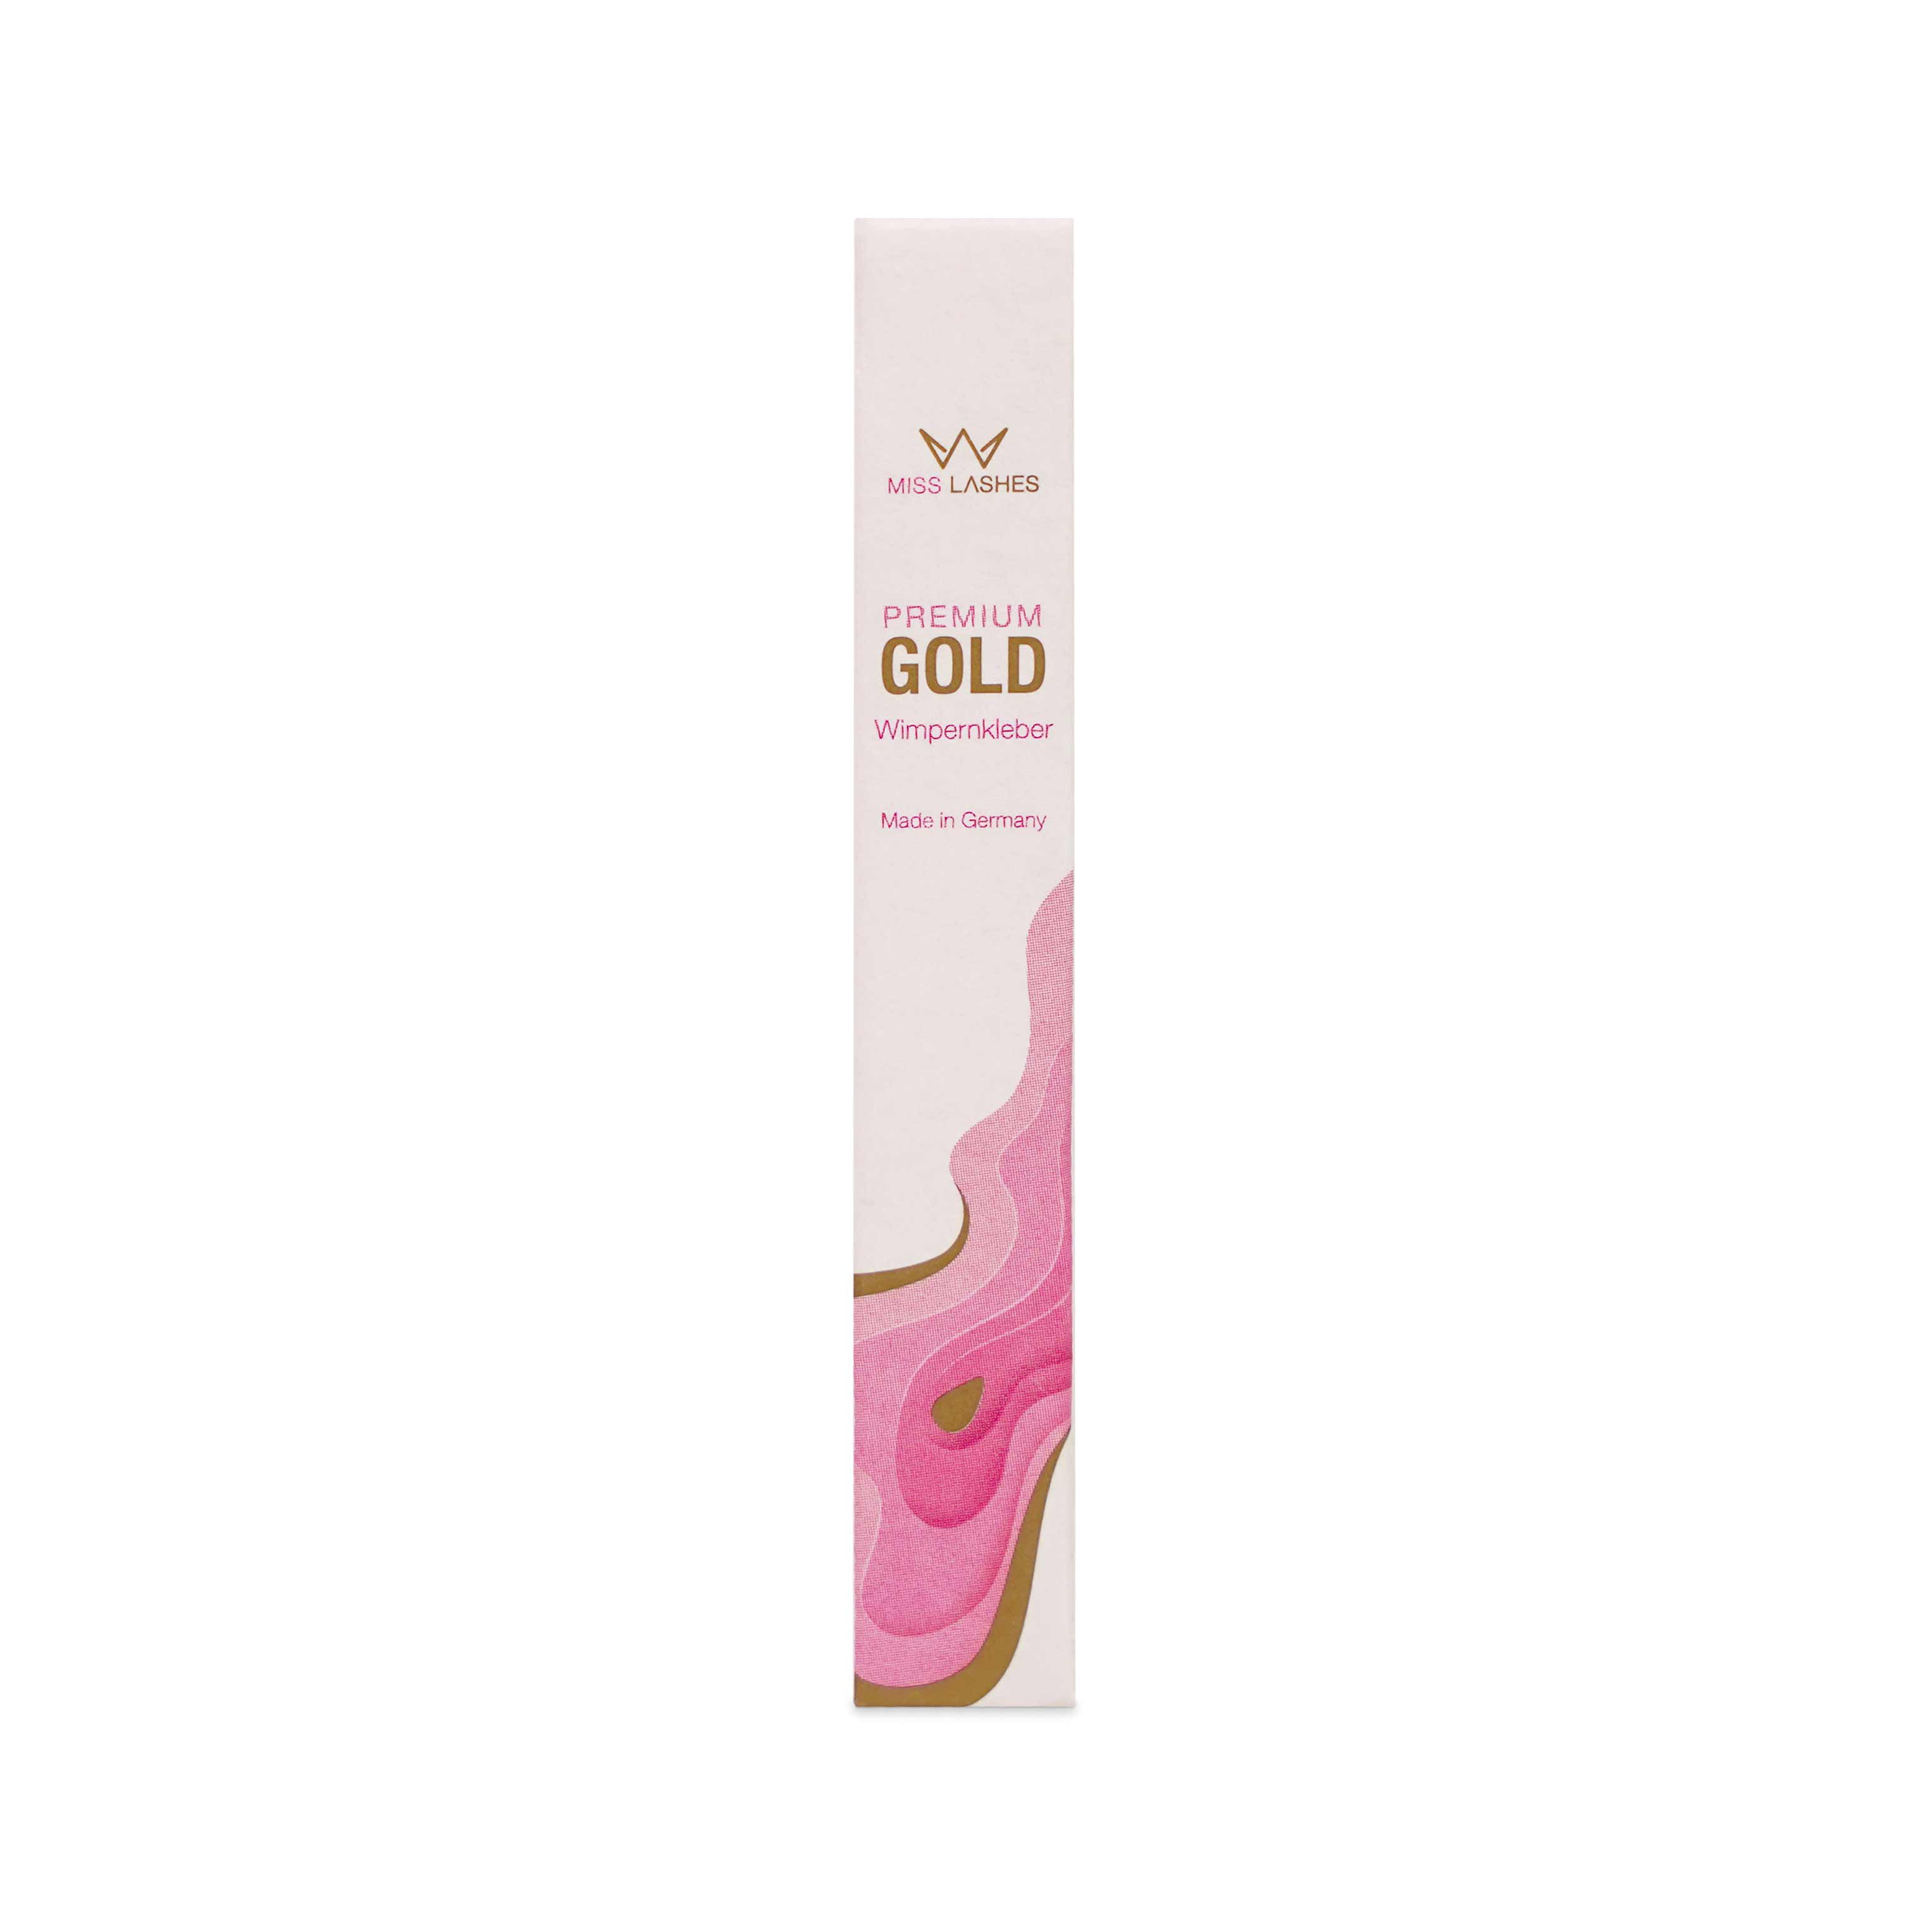 Wimpernkleber | Premium Gold |  2 g